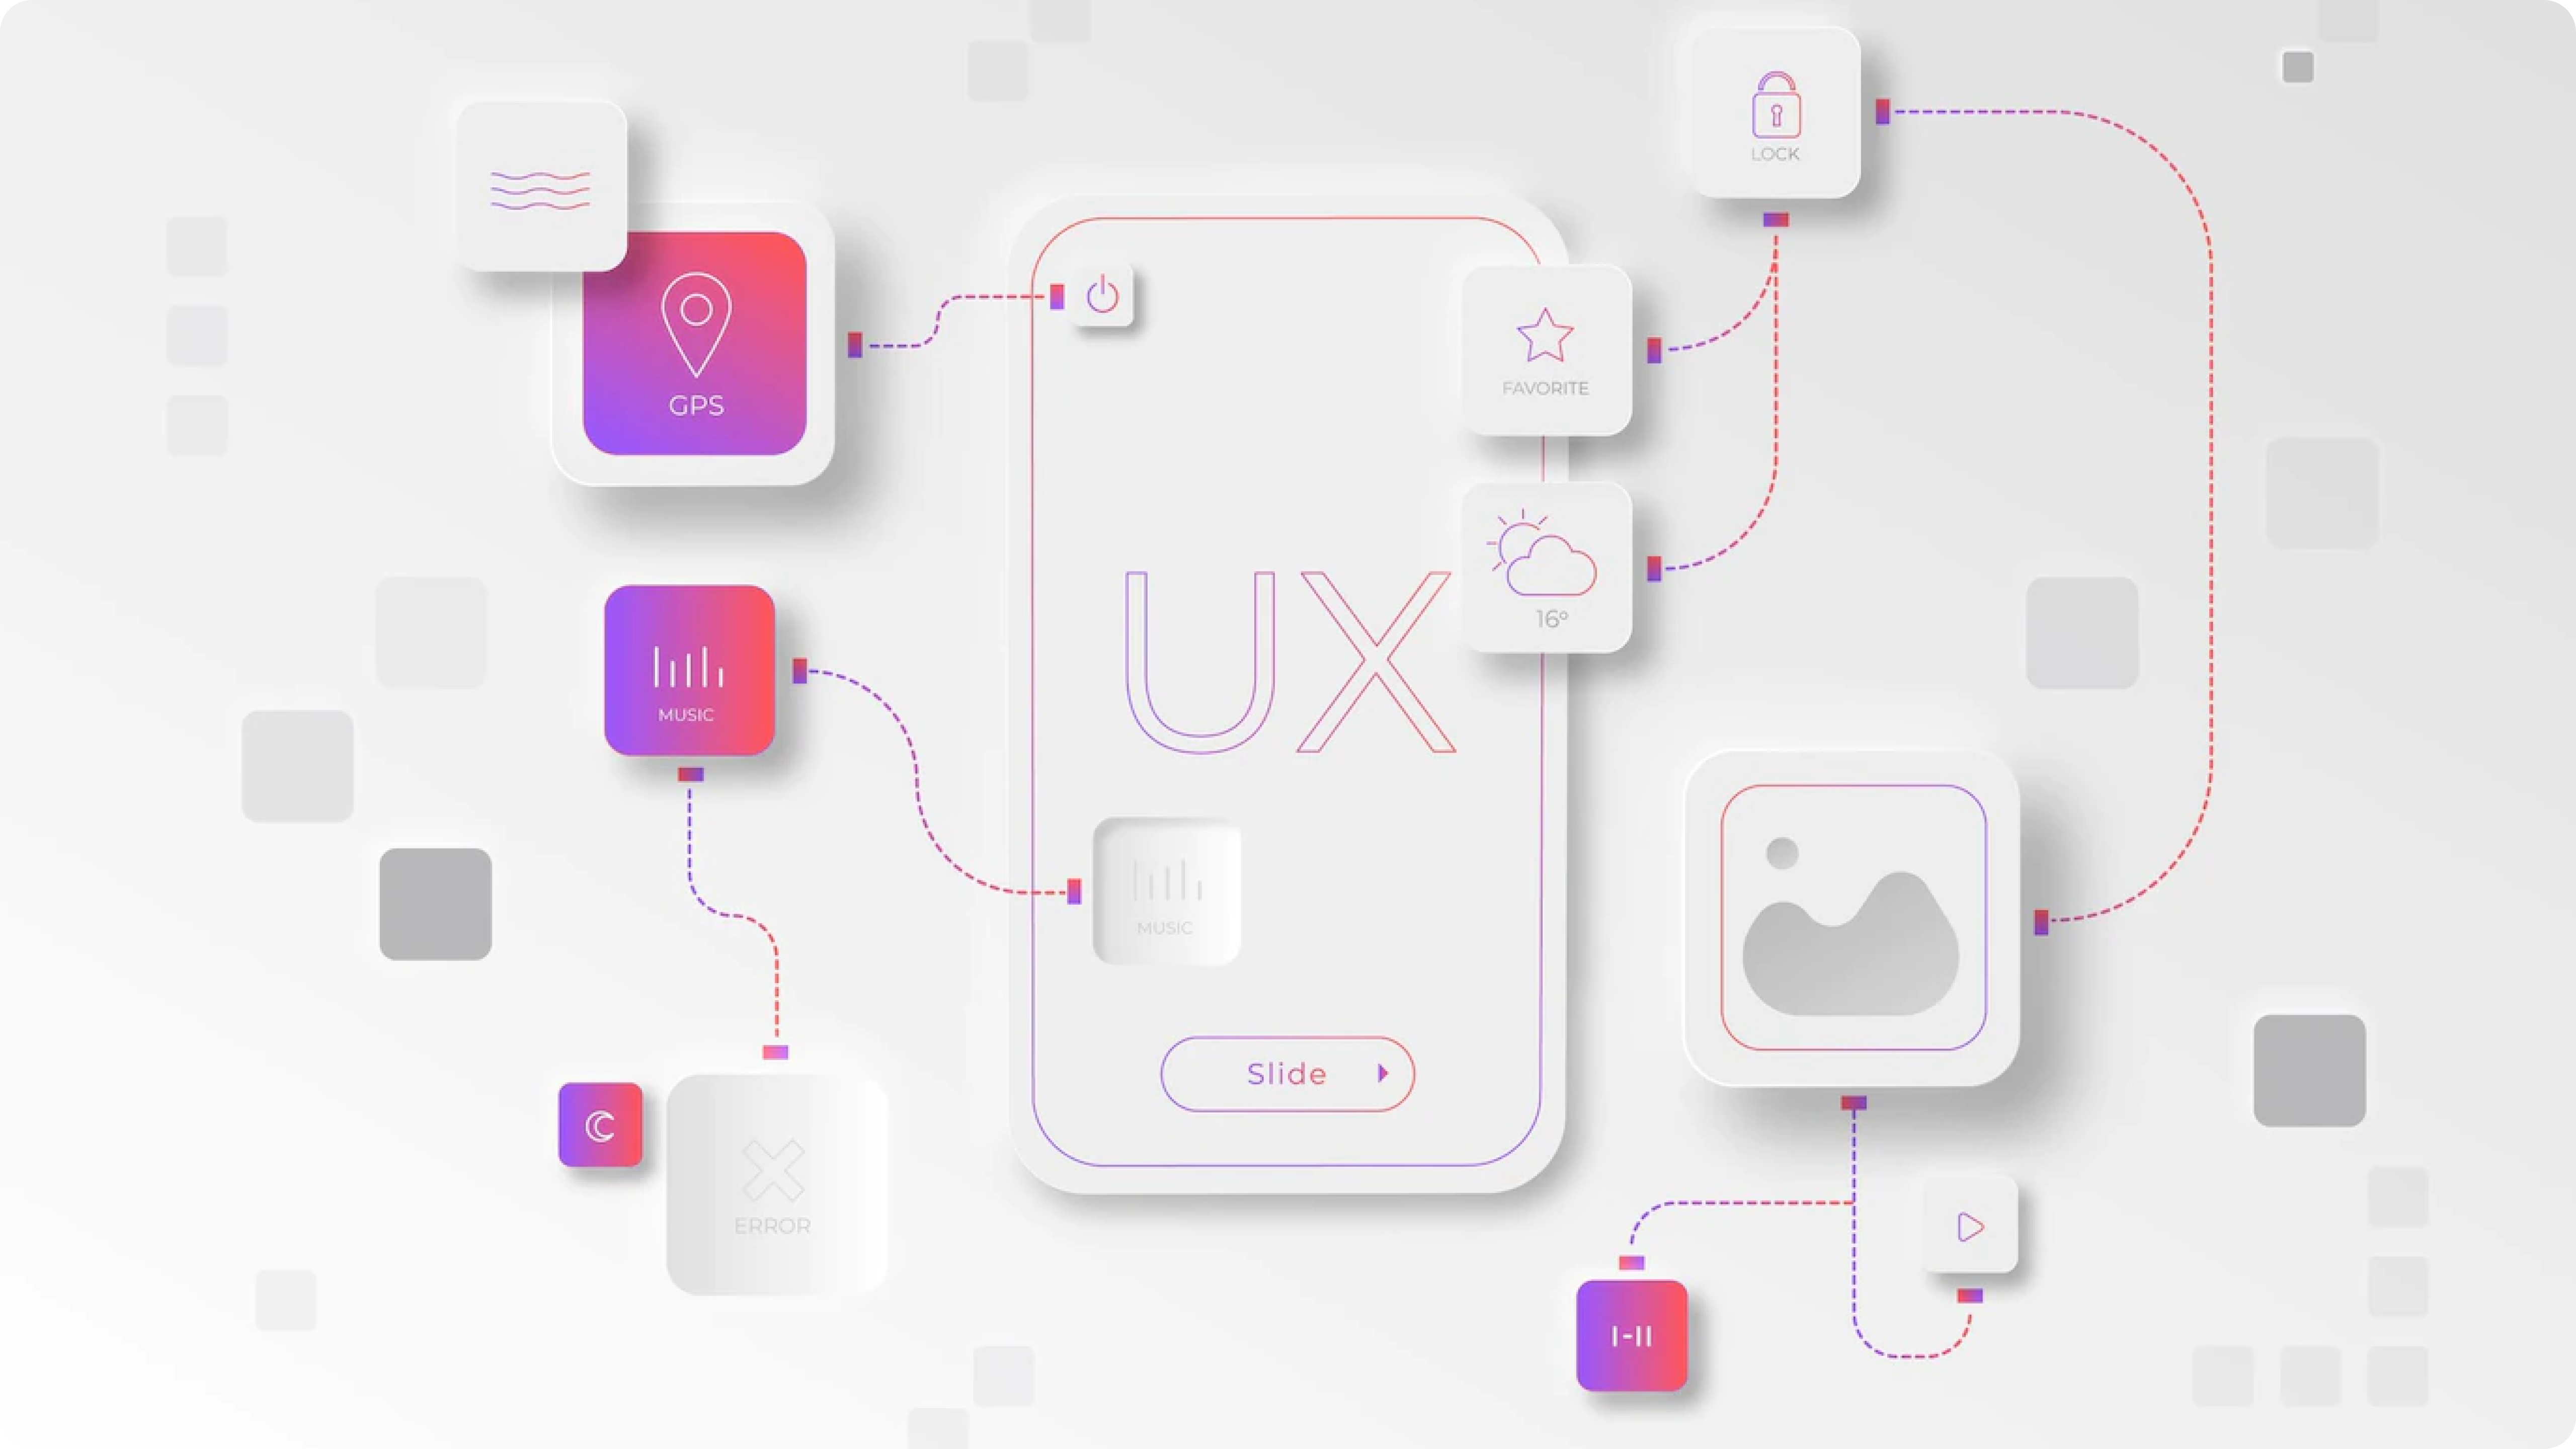 ux of m-commerce app